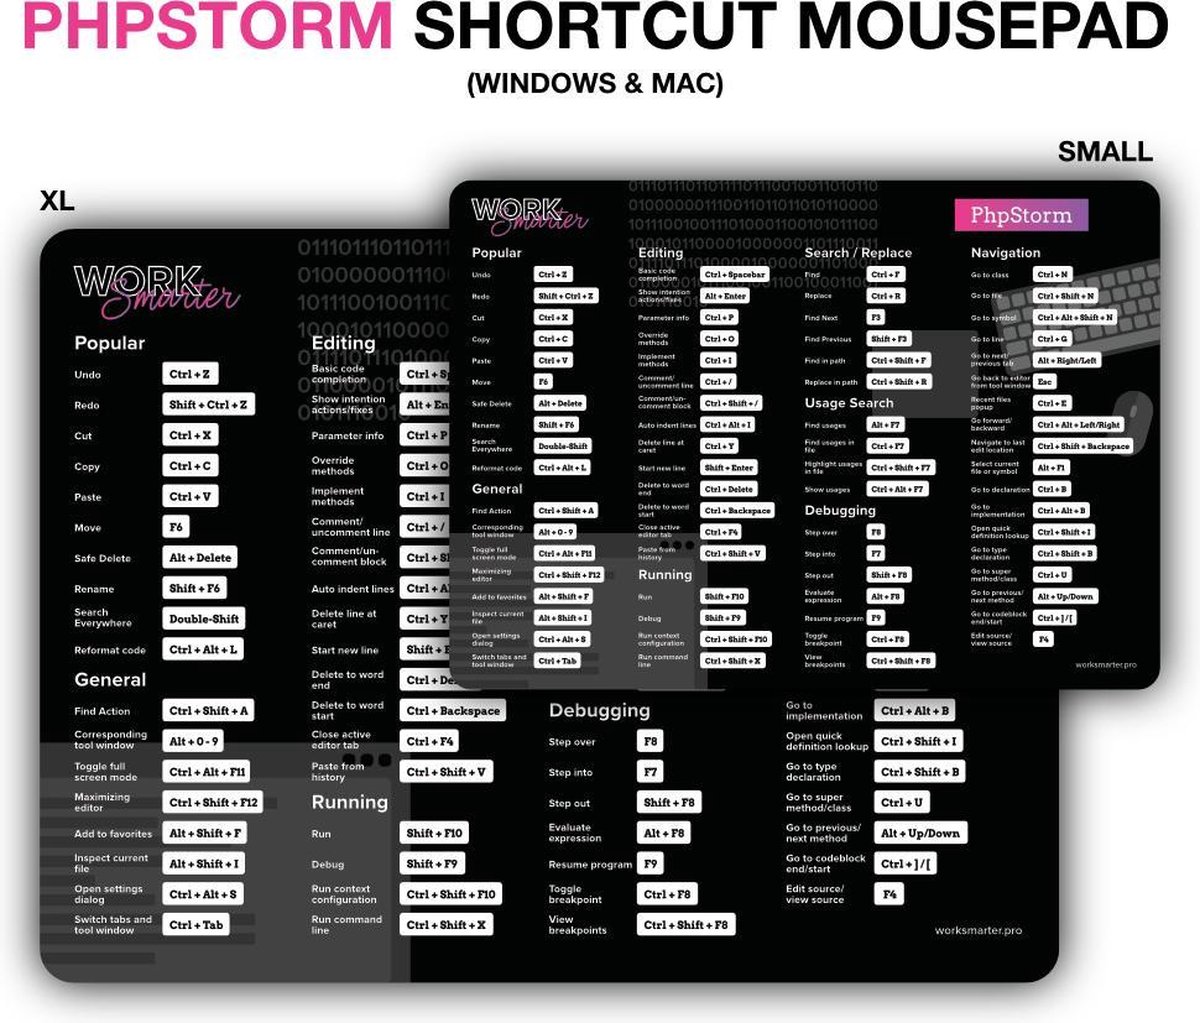 Jetbrains PHPStorm Shortcut Mousepad - XL - Mac